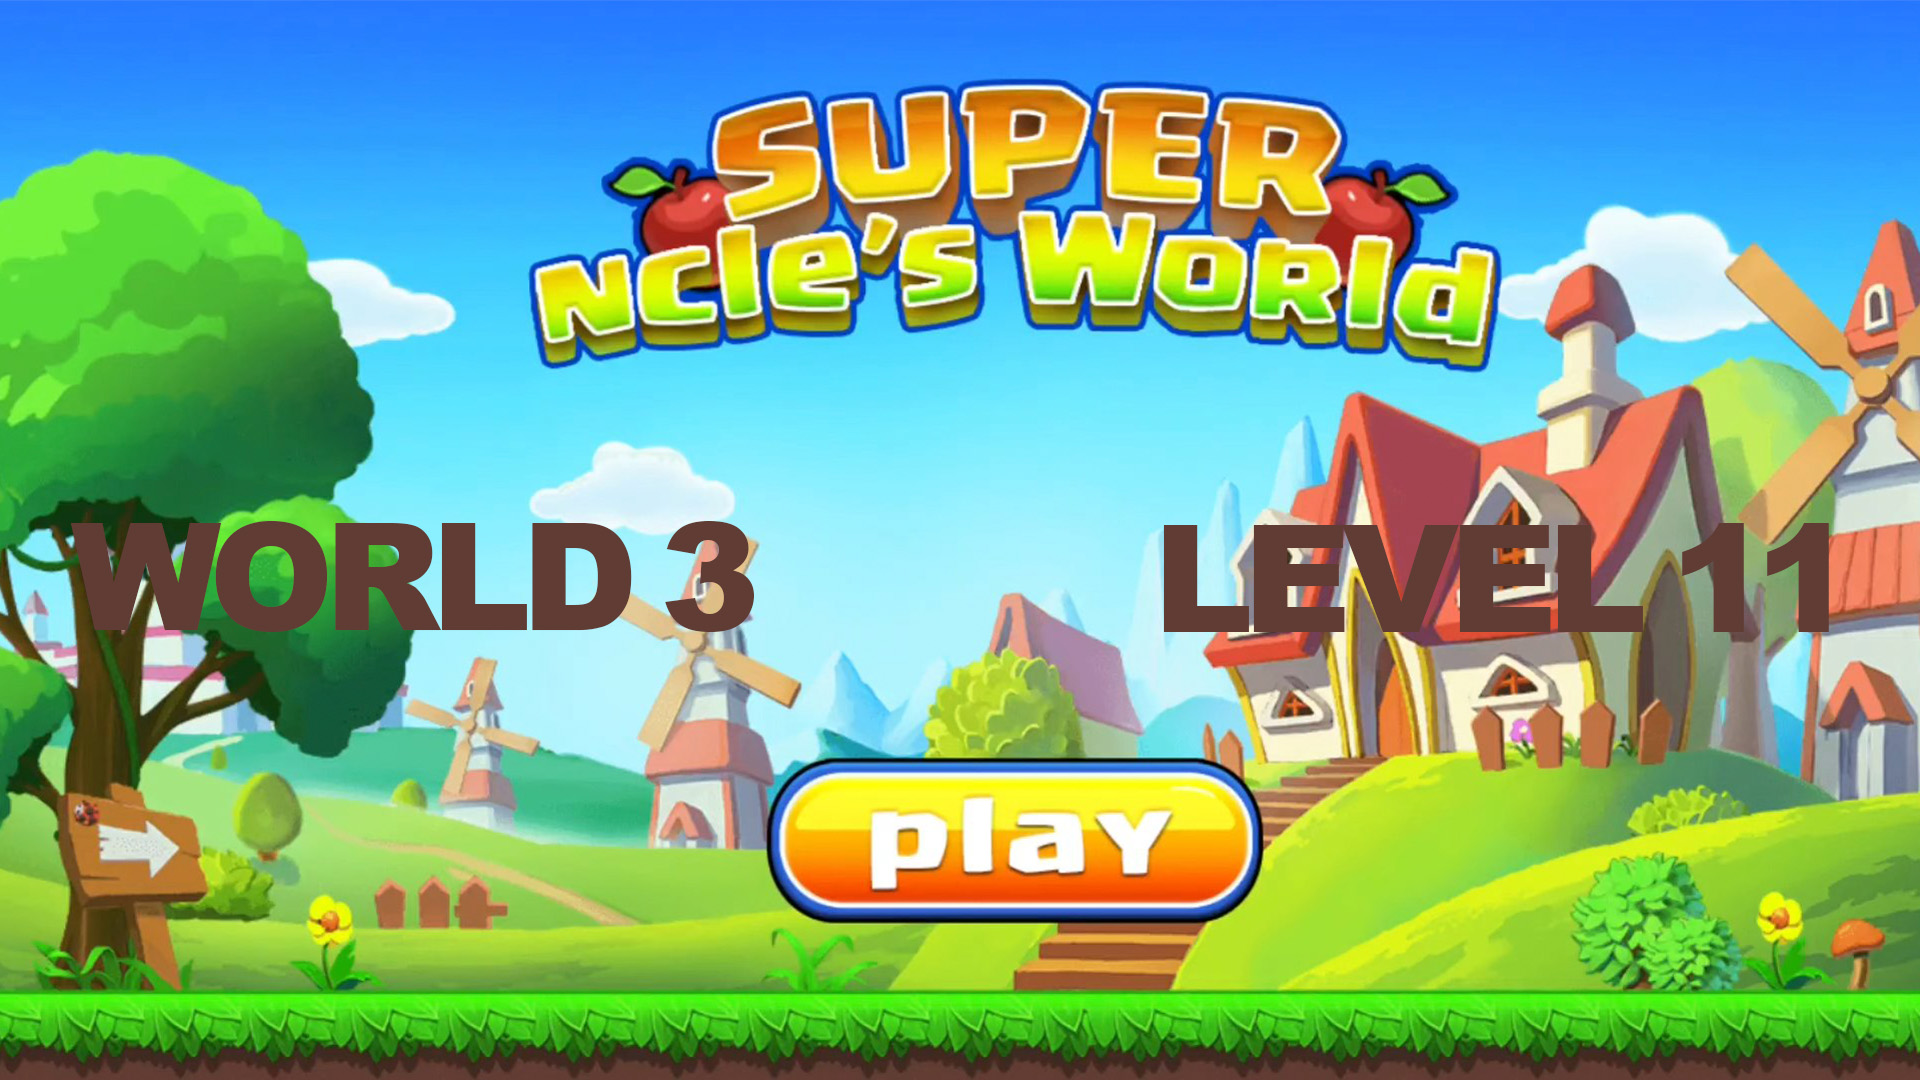 Super ncle's  World 3. Level 11.